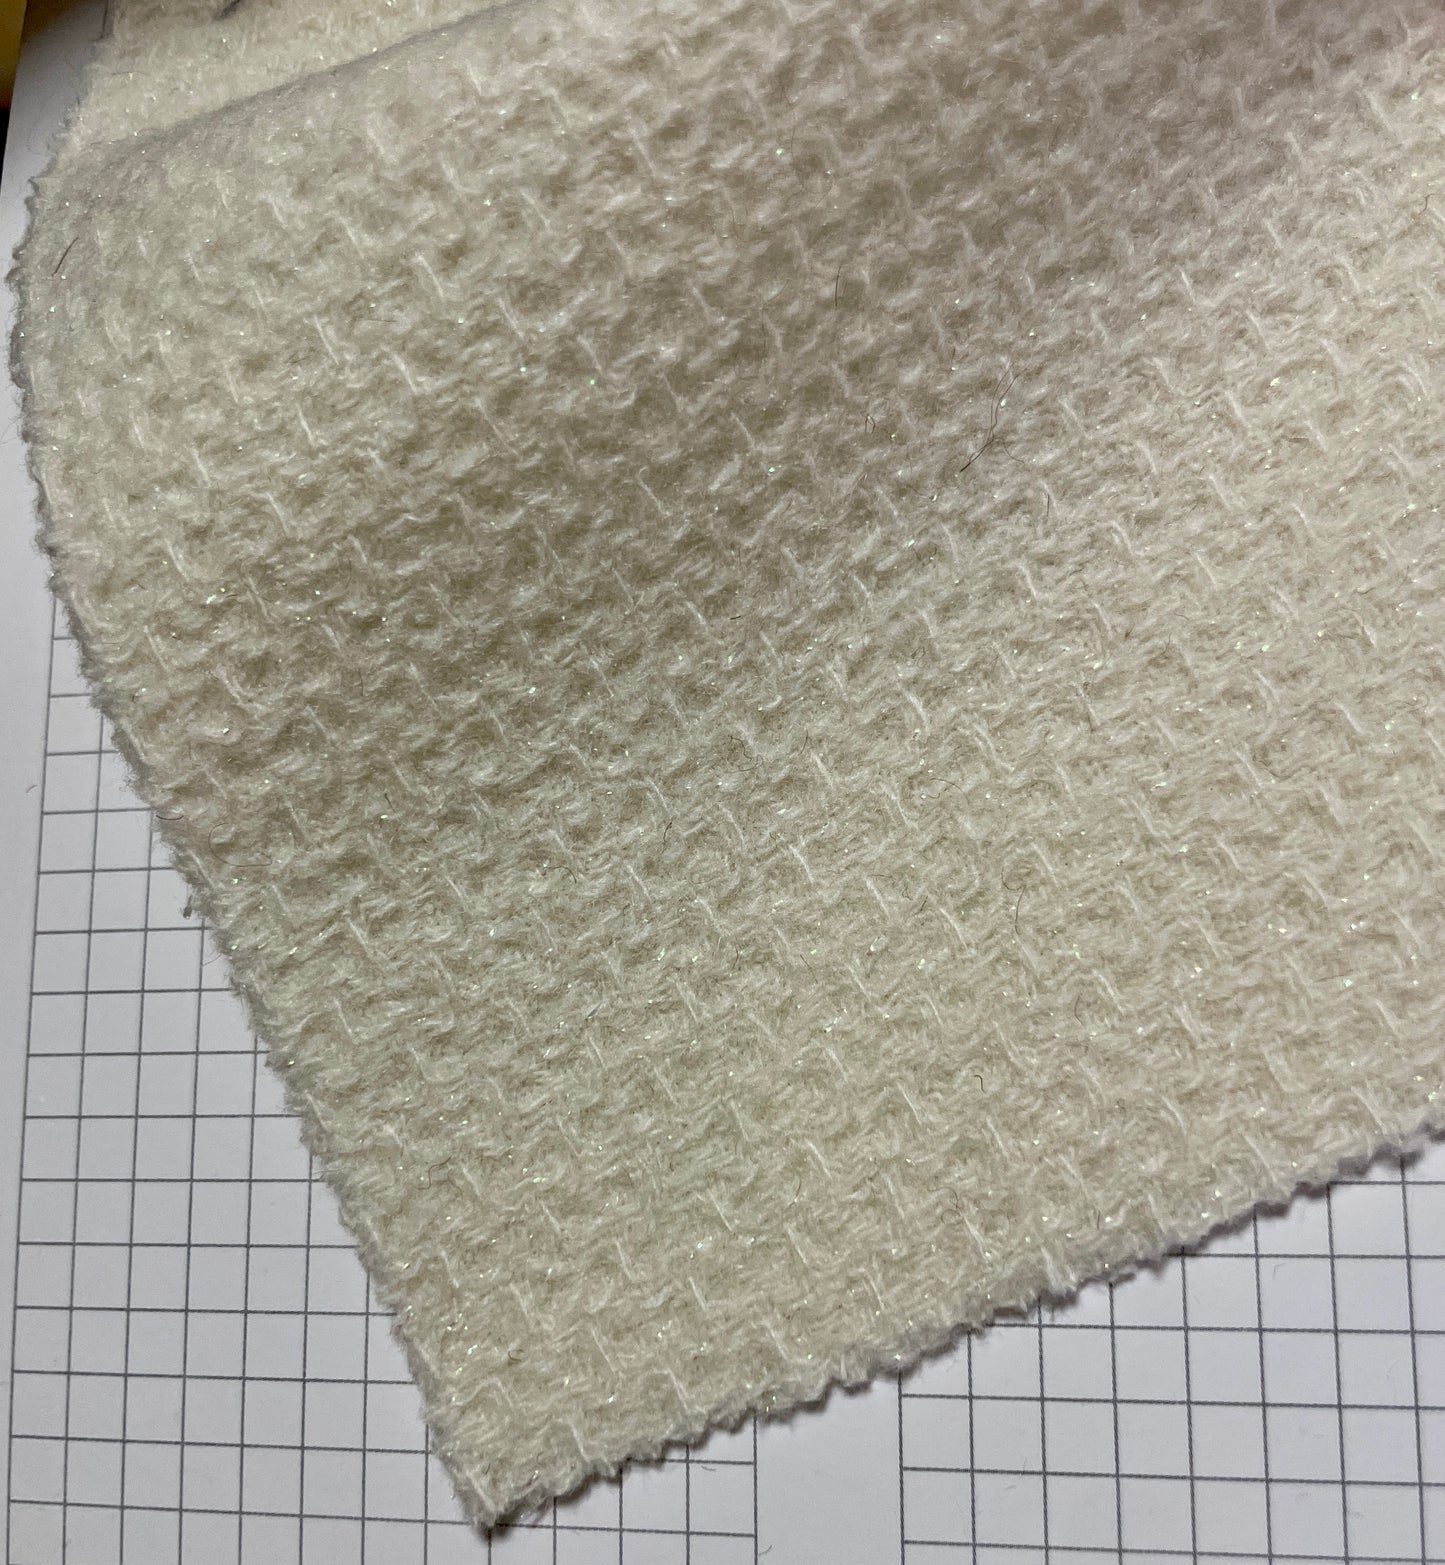 Wool Polyester blended Tweed/Boucle Fabric for Coat - Natasha Fabric